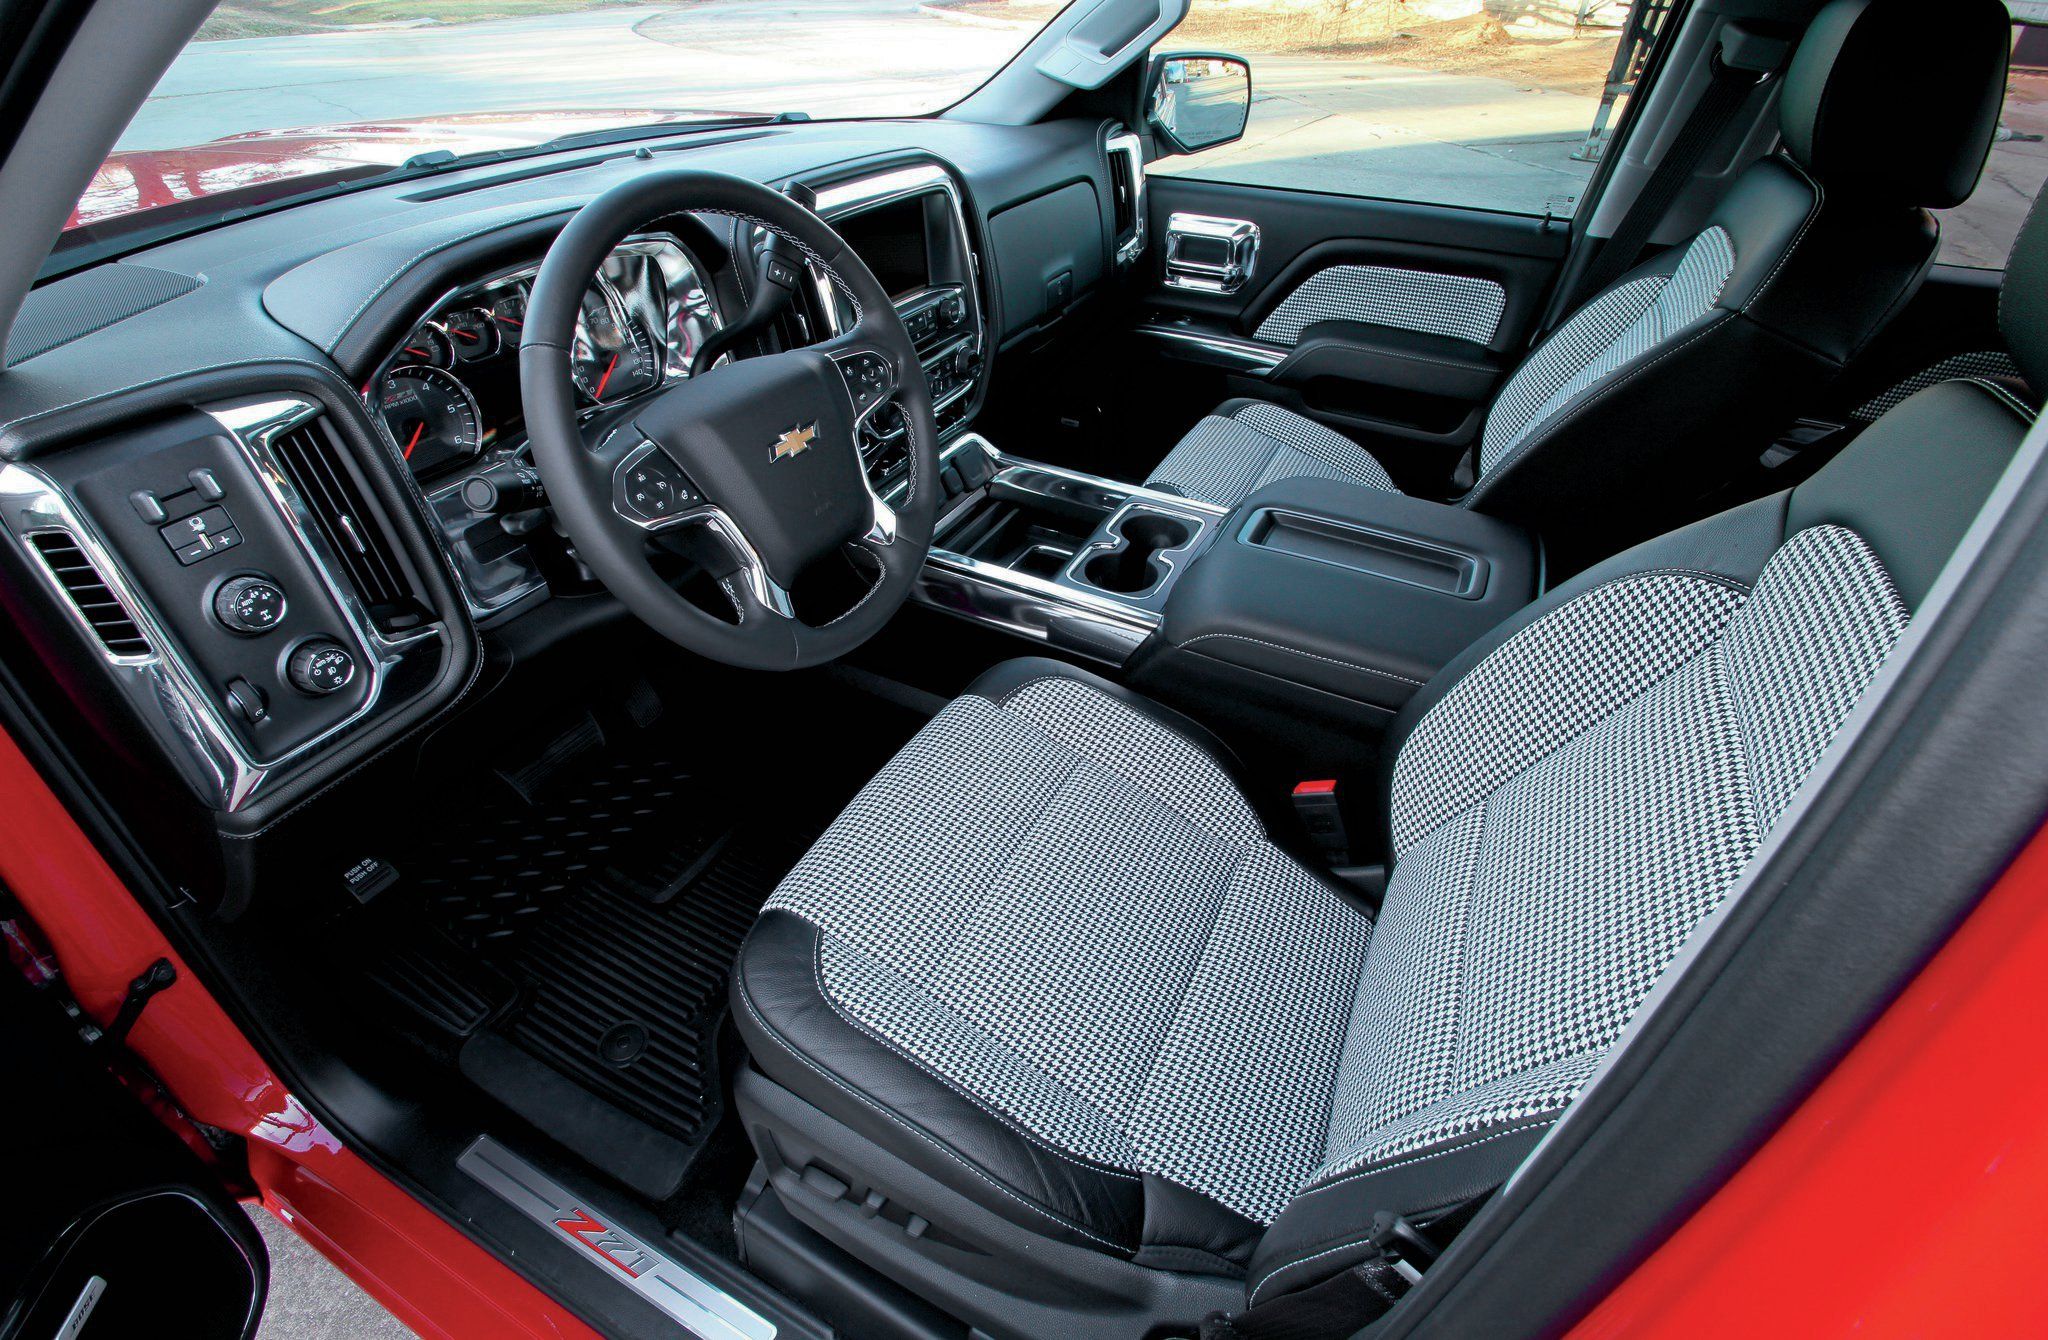 https://mallettcars.com/wp-content/uploads/2019/05/2014-chevy-silverado-retro-mallet-super10-interior.jpg